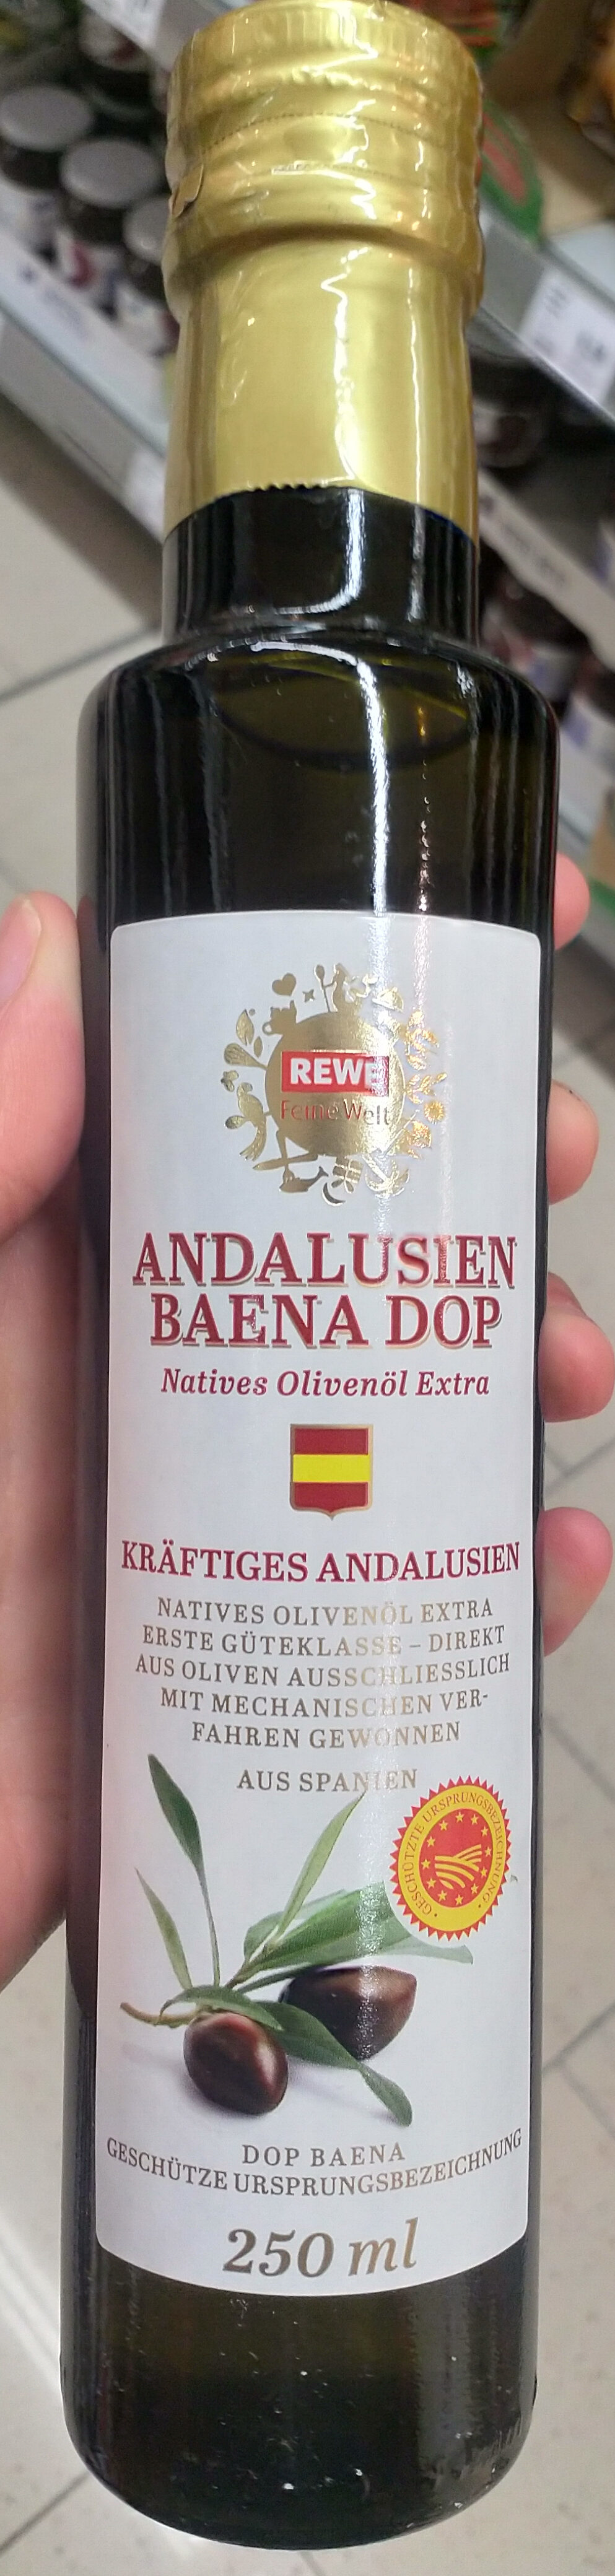 Andalusien Baena DOP - Product - de